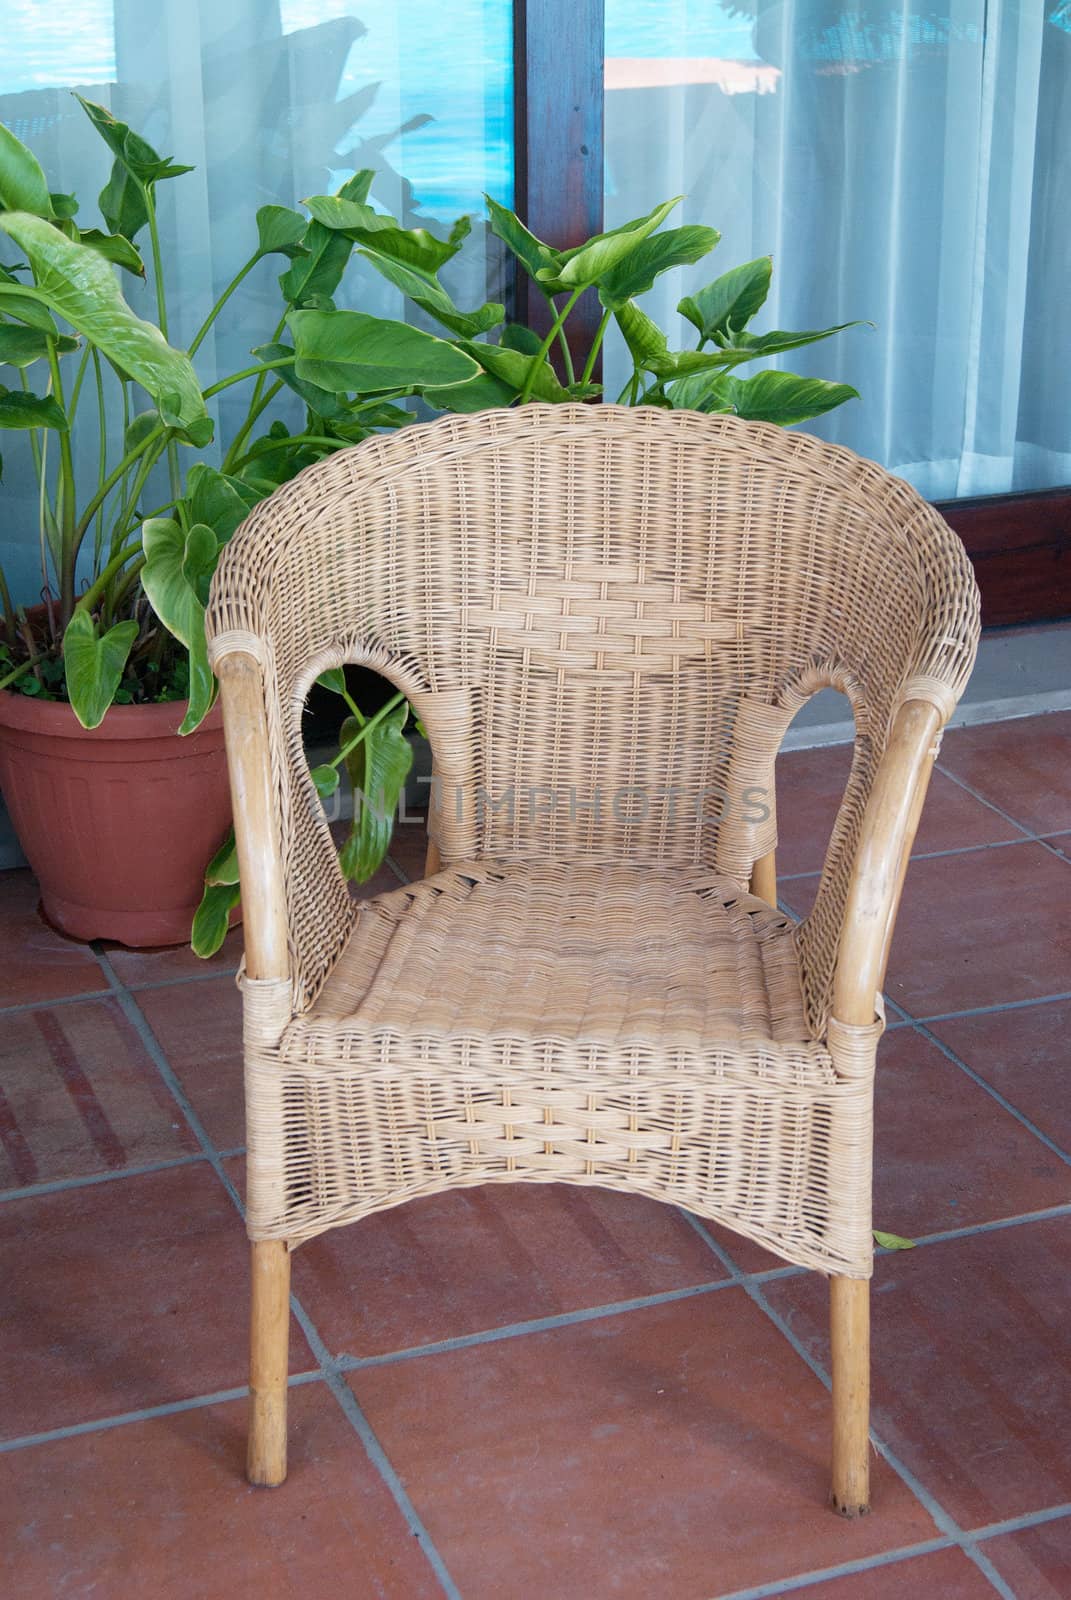 Wicker chair rattan brown villa near the  window on stone slabs vertical format